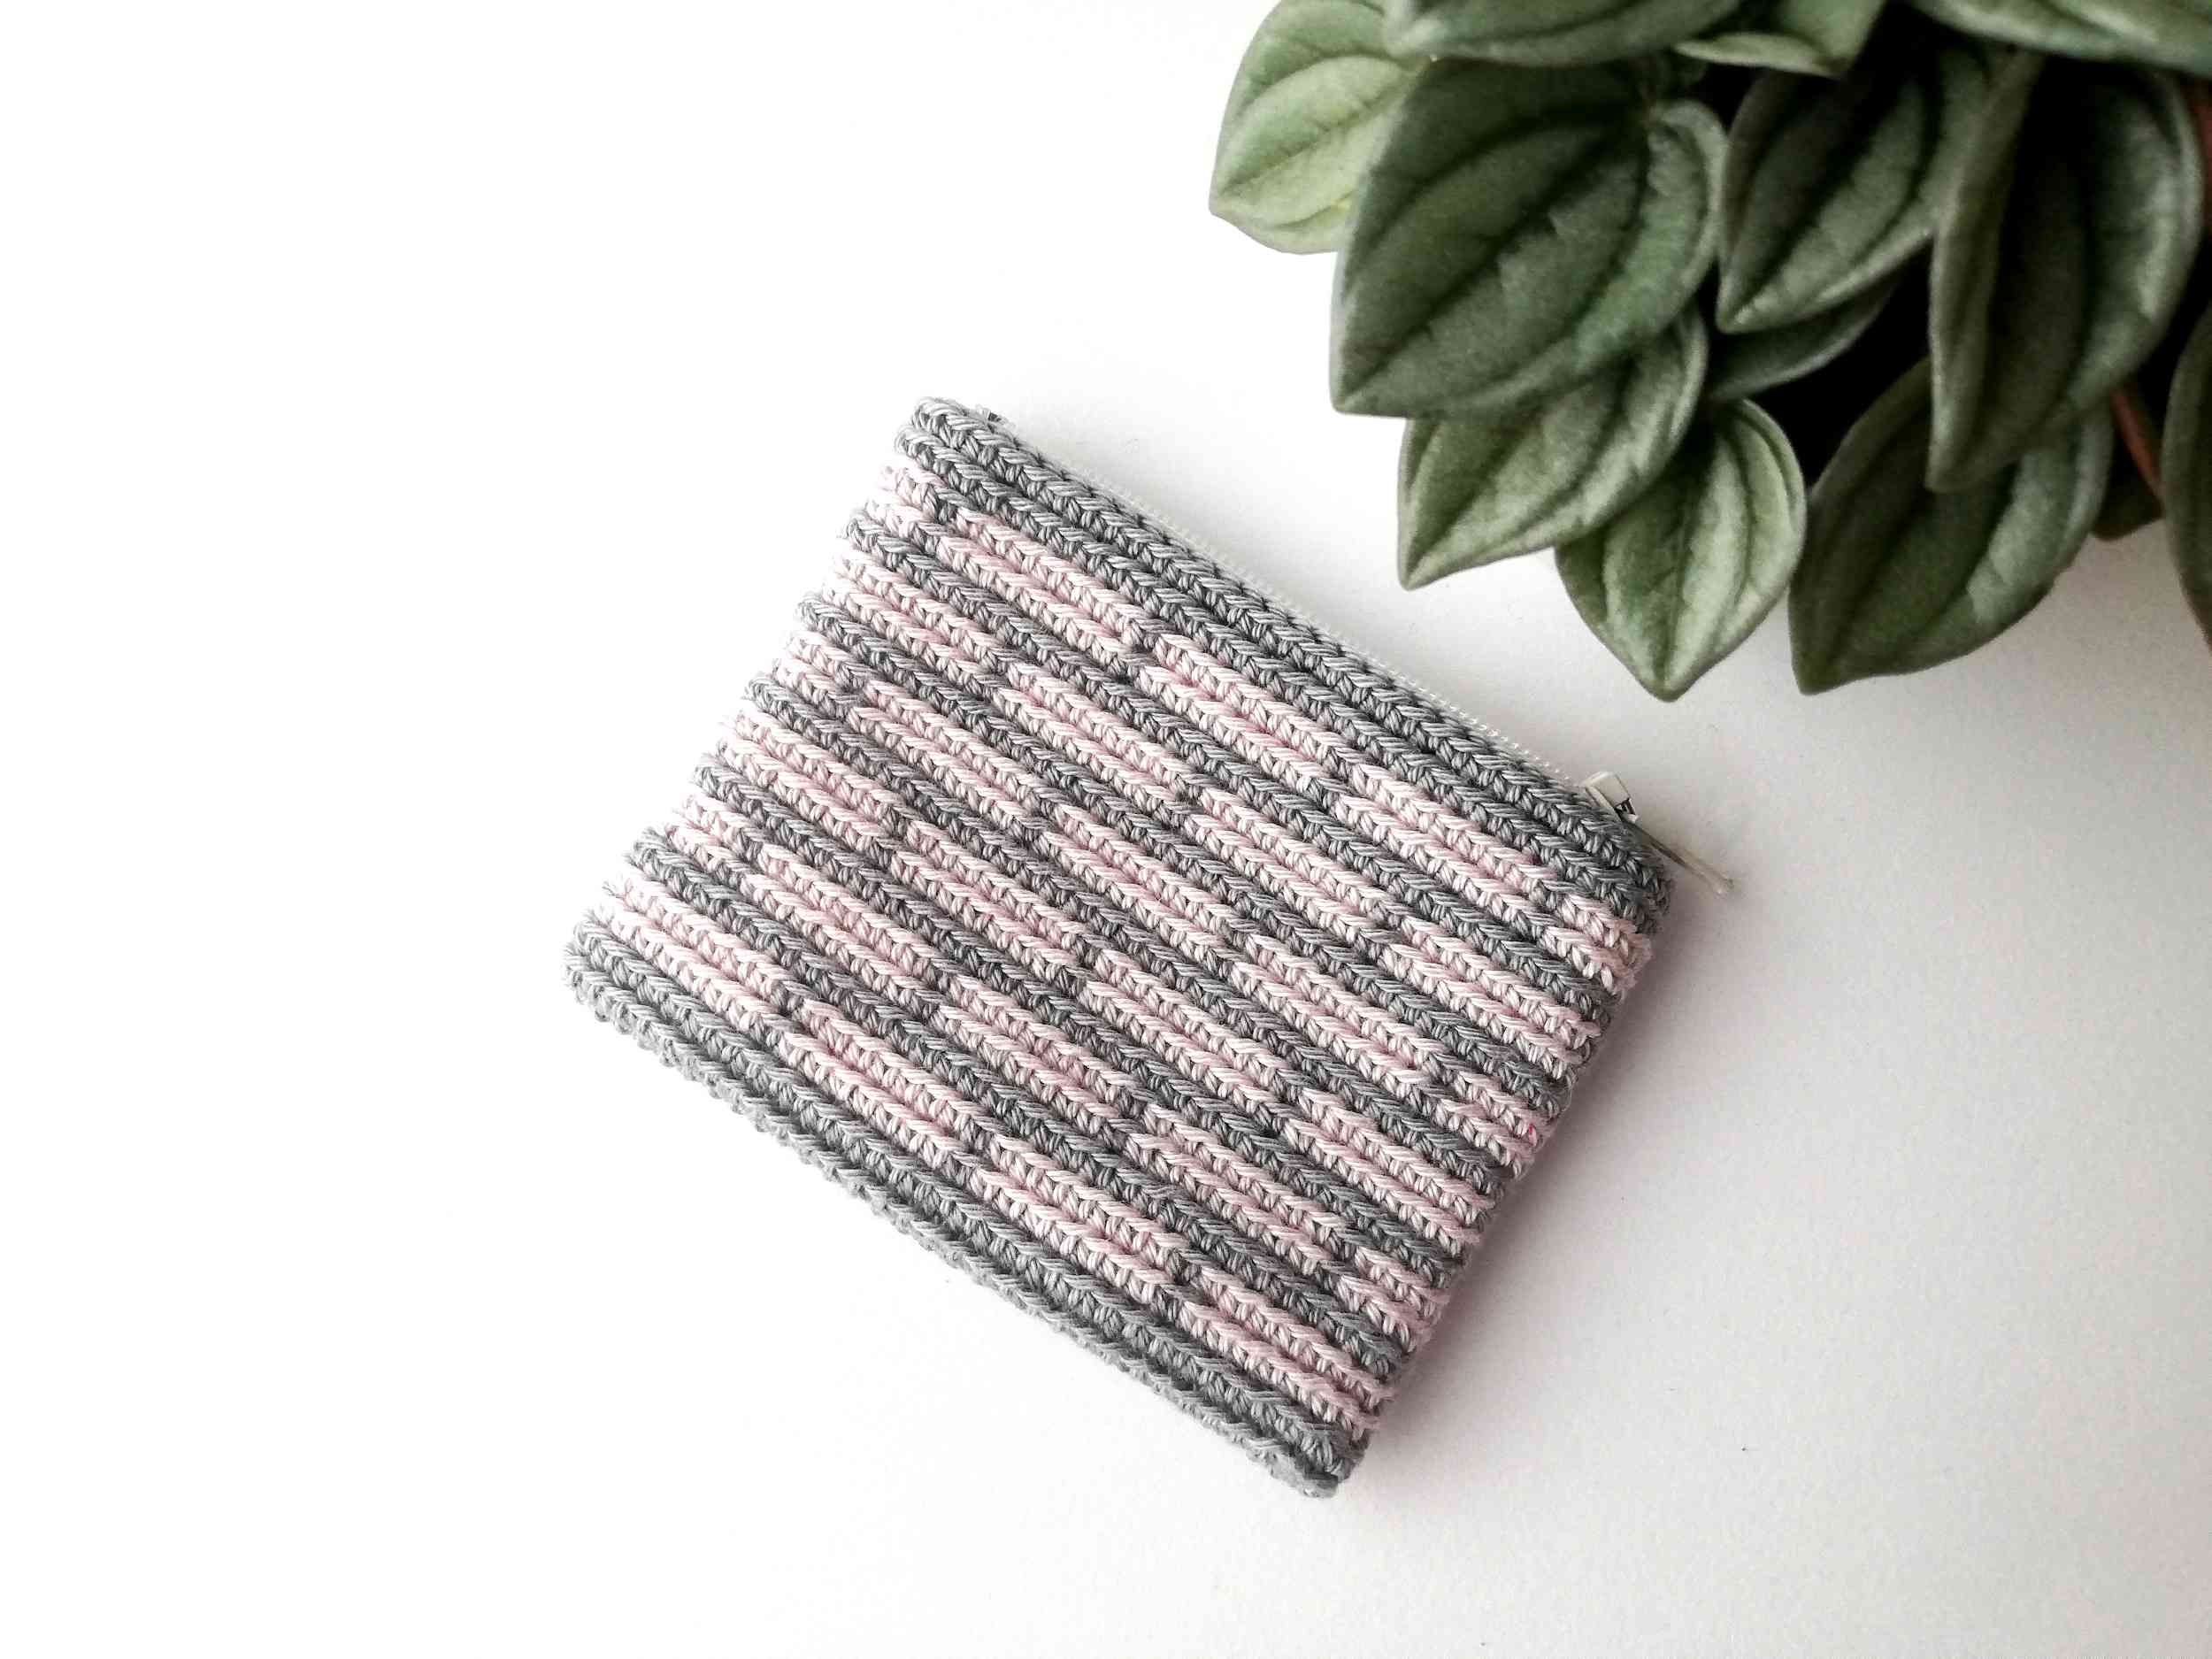 Tapestry crochet zipper pouch with bricks